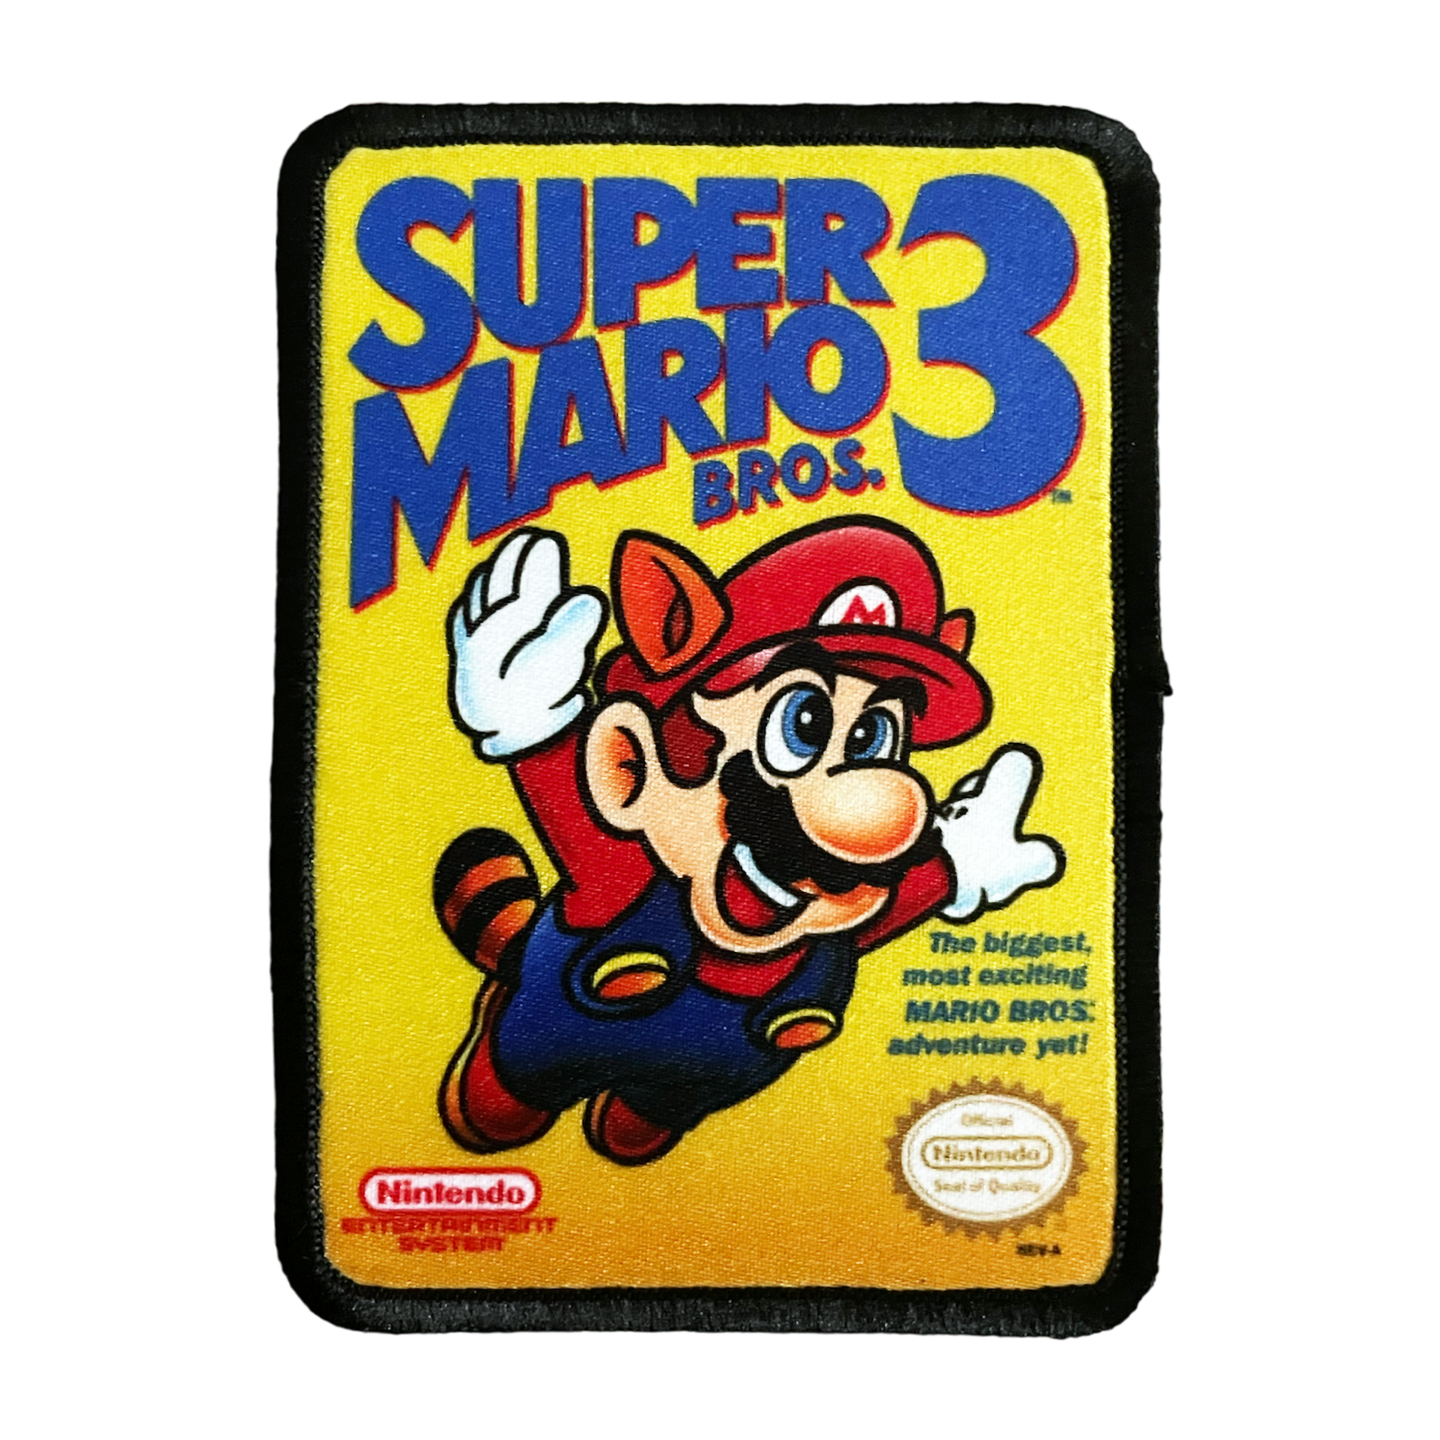 Super Mario Bros 3 NES Iron-On Patch